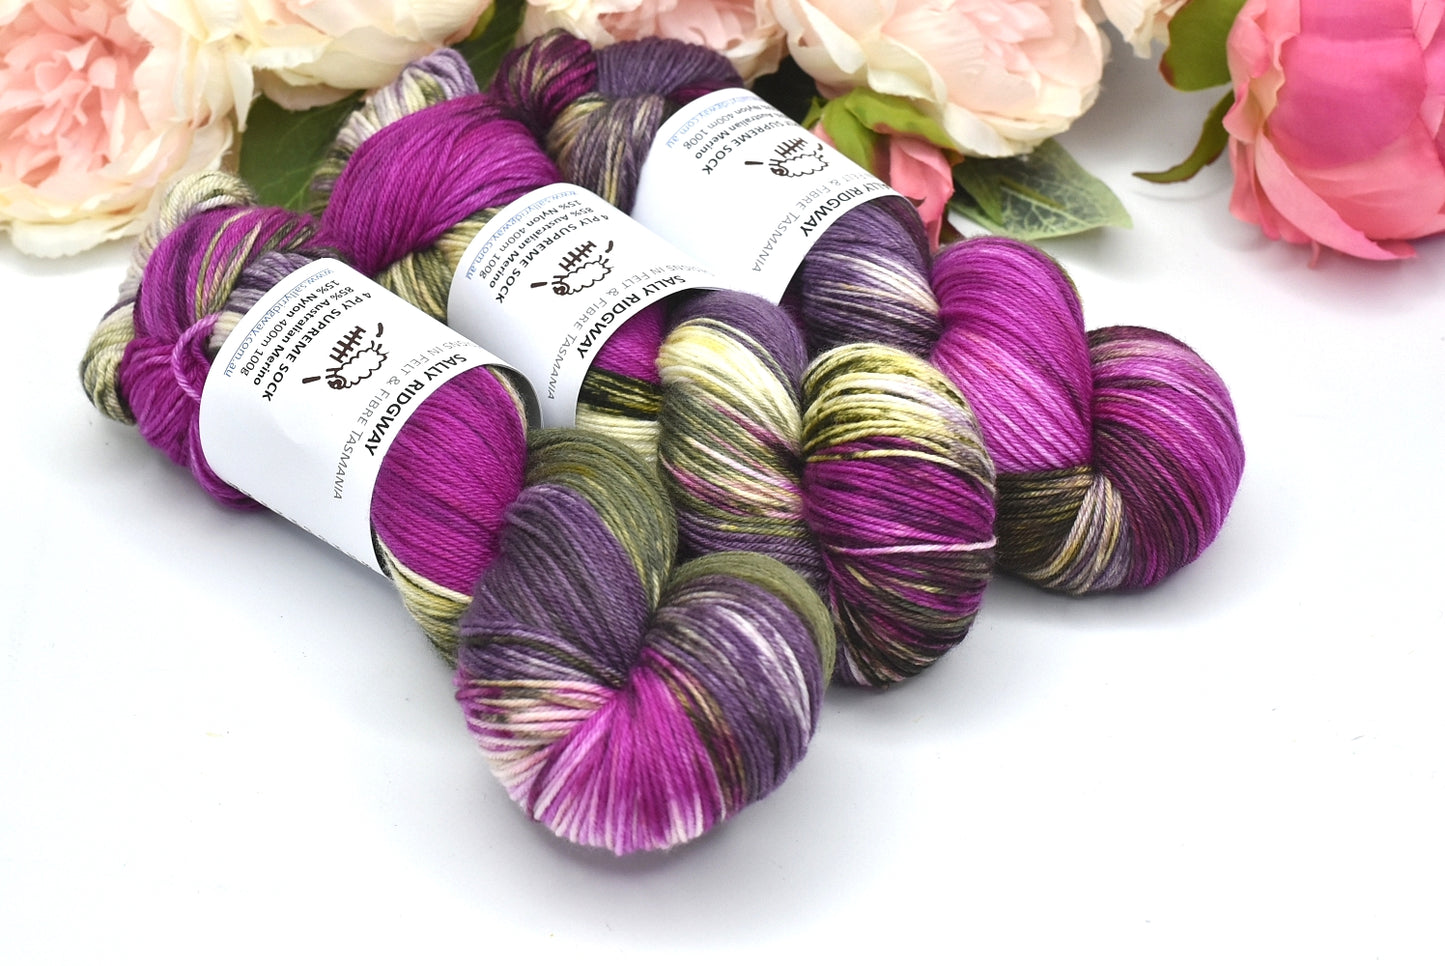 4 ply Supreme Sock Yarn Hand Dyed Vintage Rose 13202| Sock Yarn | Sally Ridgway | Shop Wool, Felt and Fibre Online